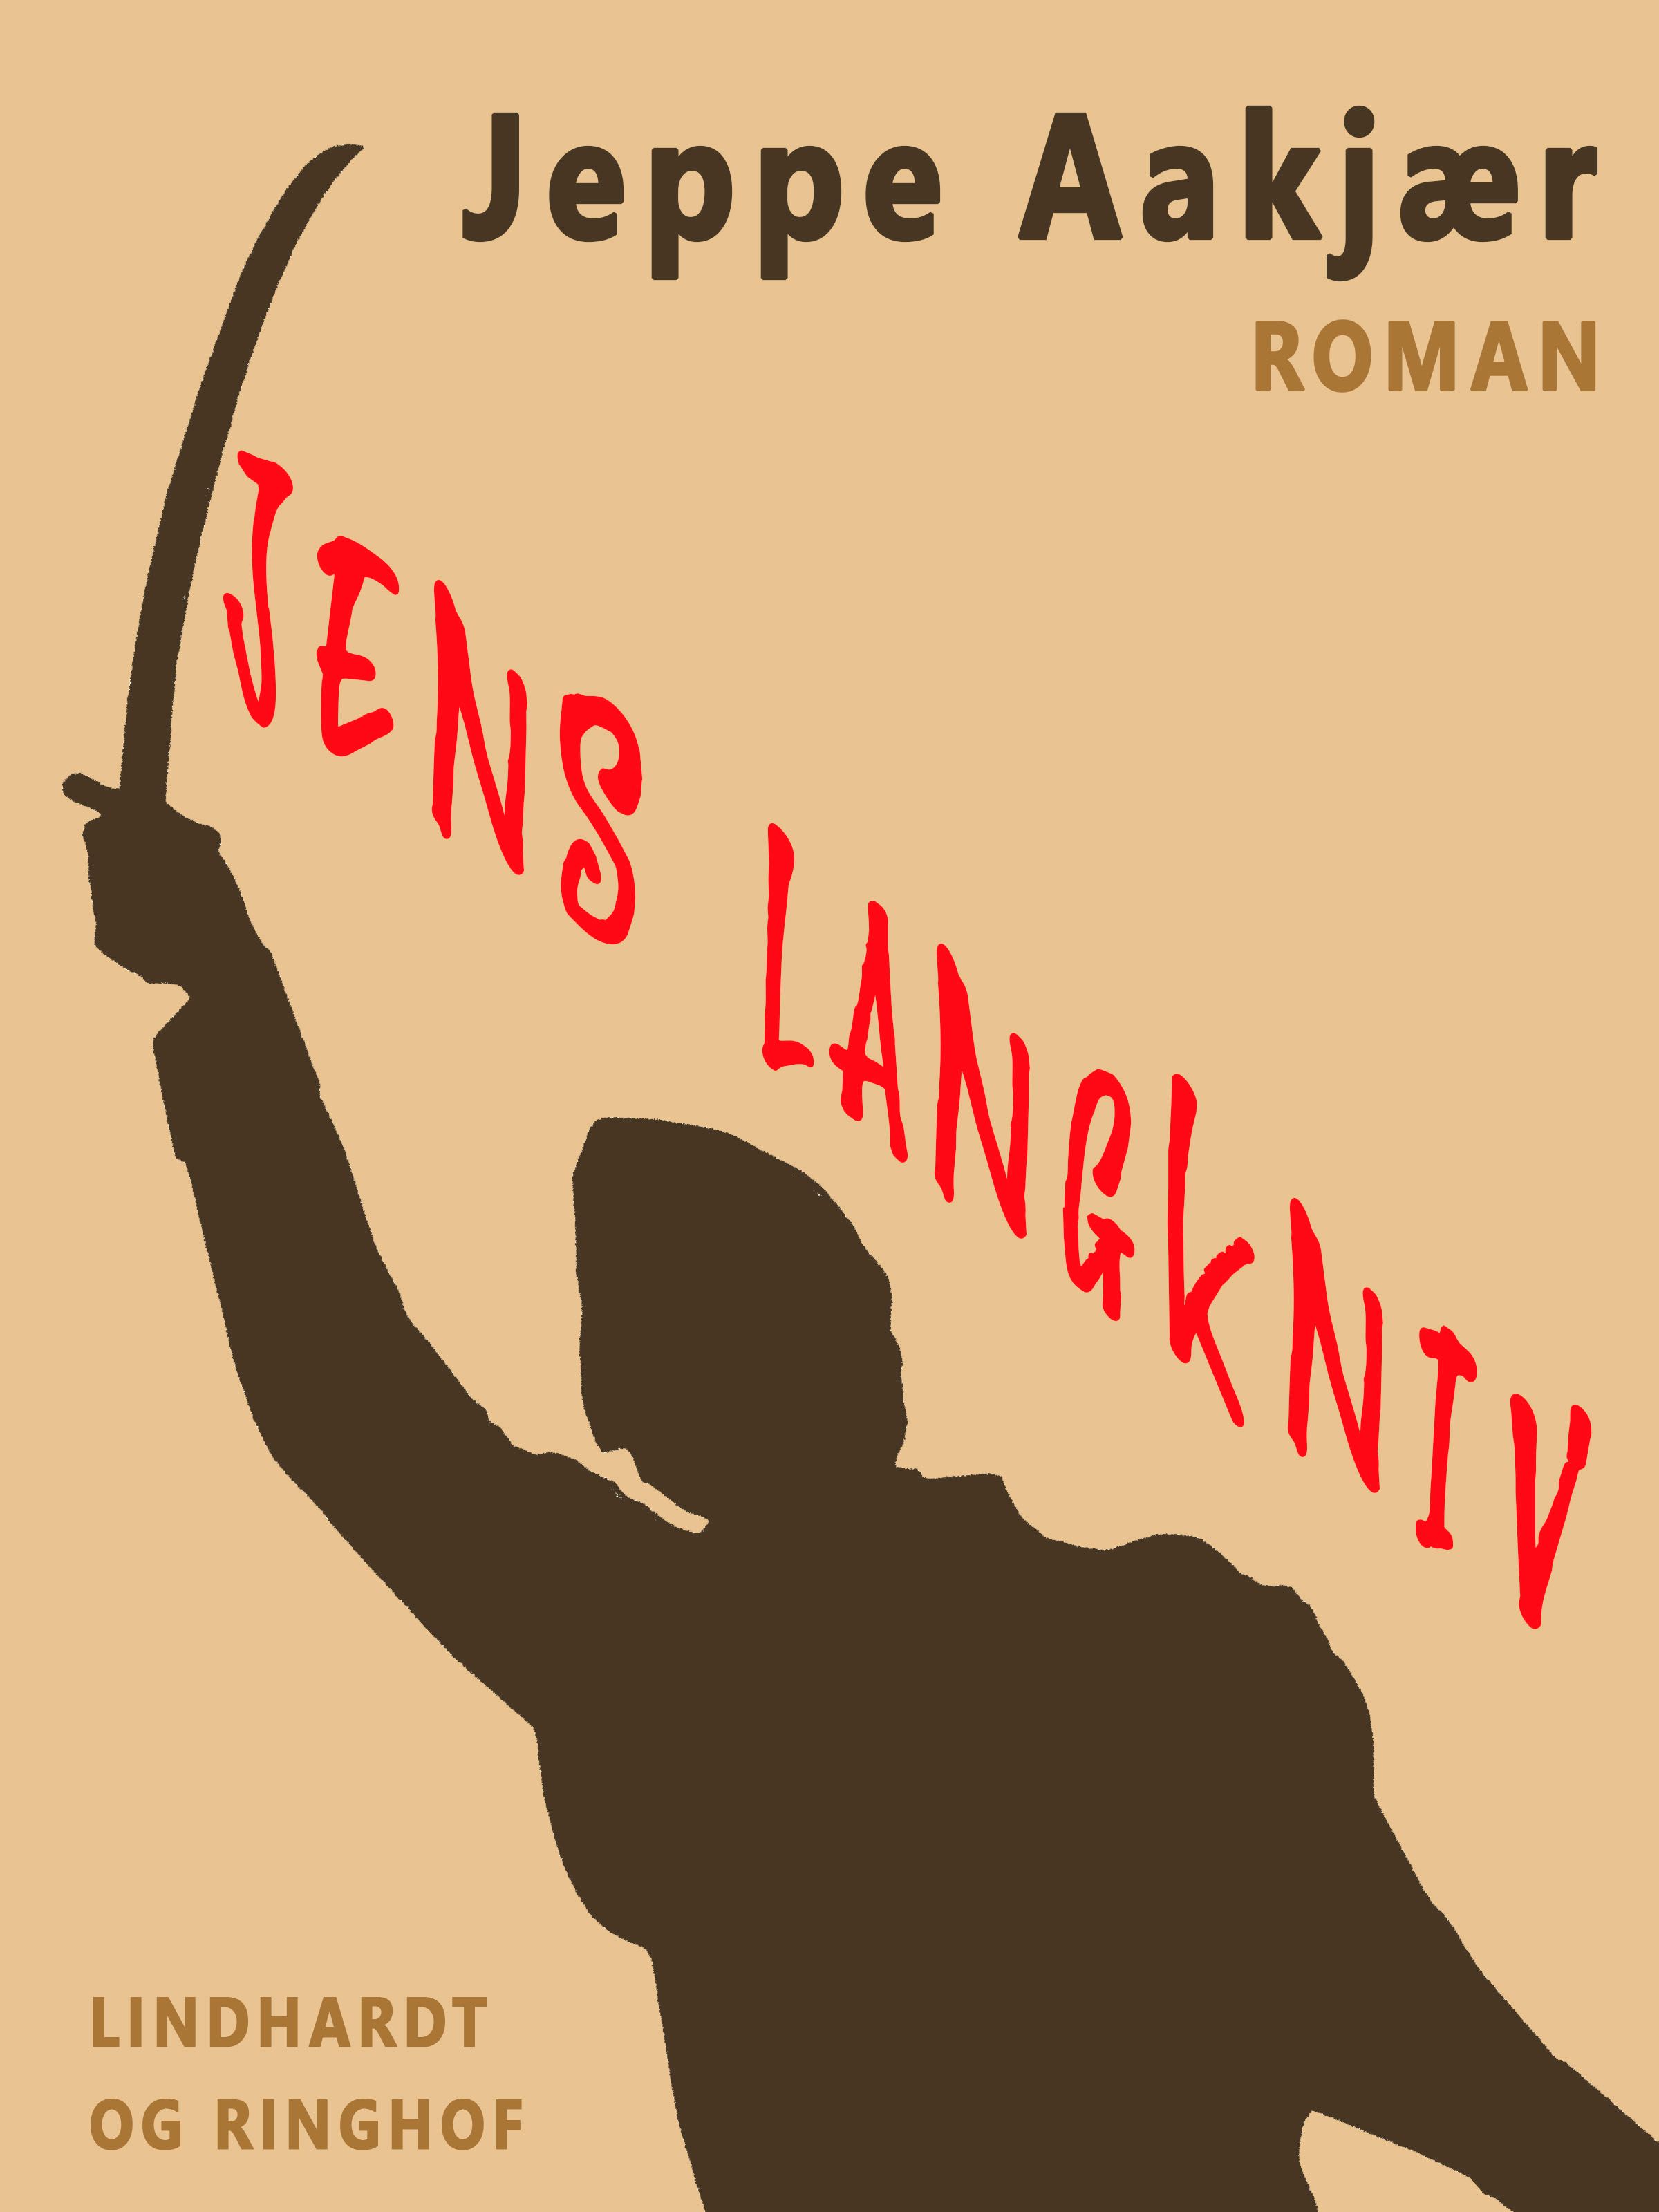 Jens Langkniv, eBook by Jeppe Aakjær